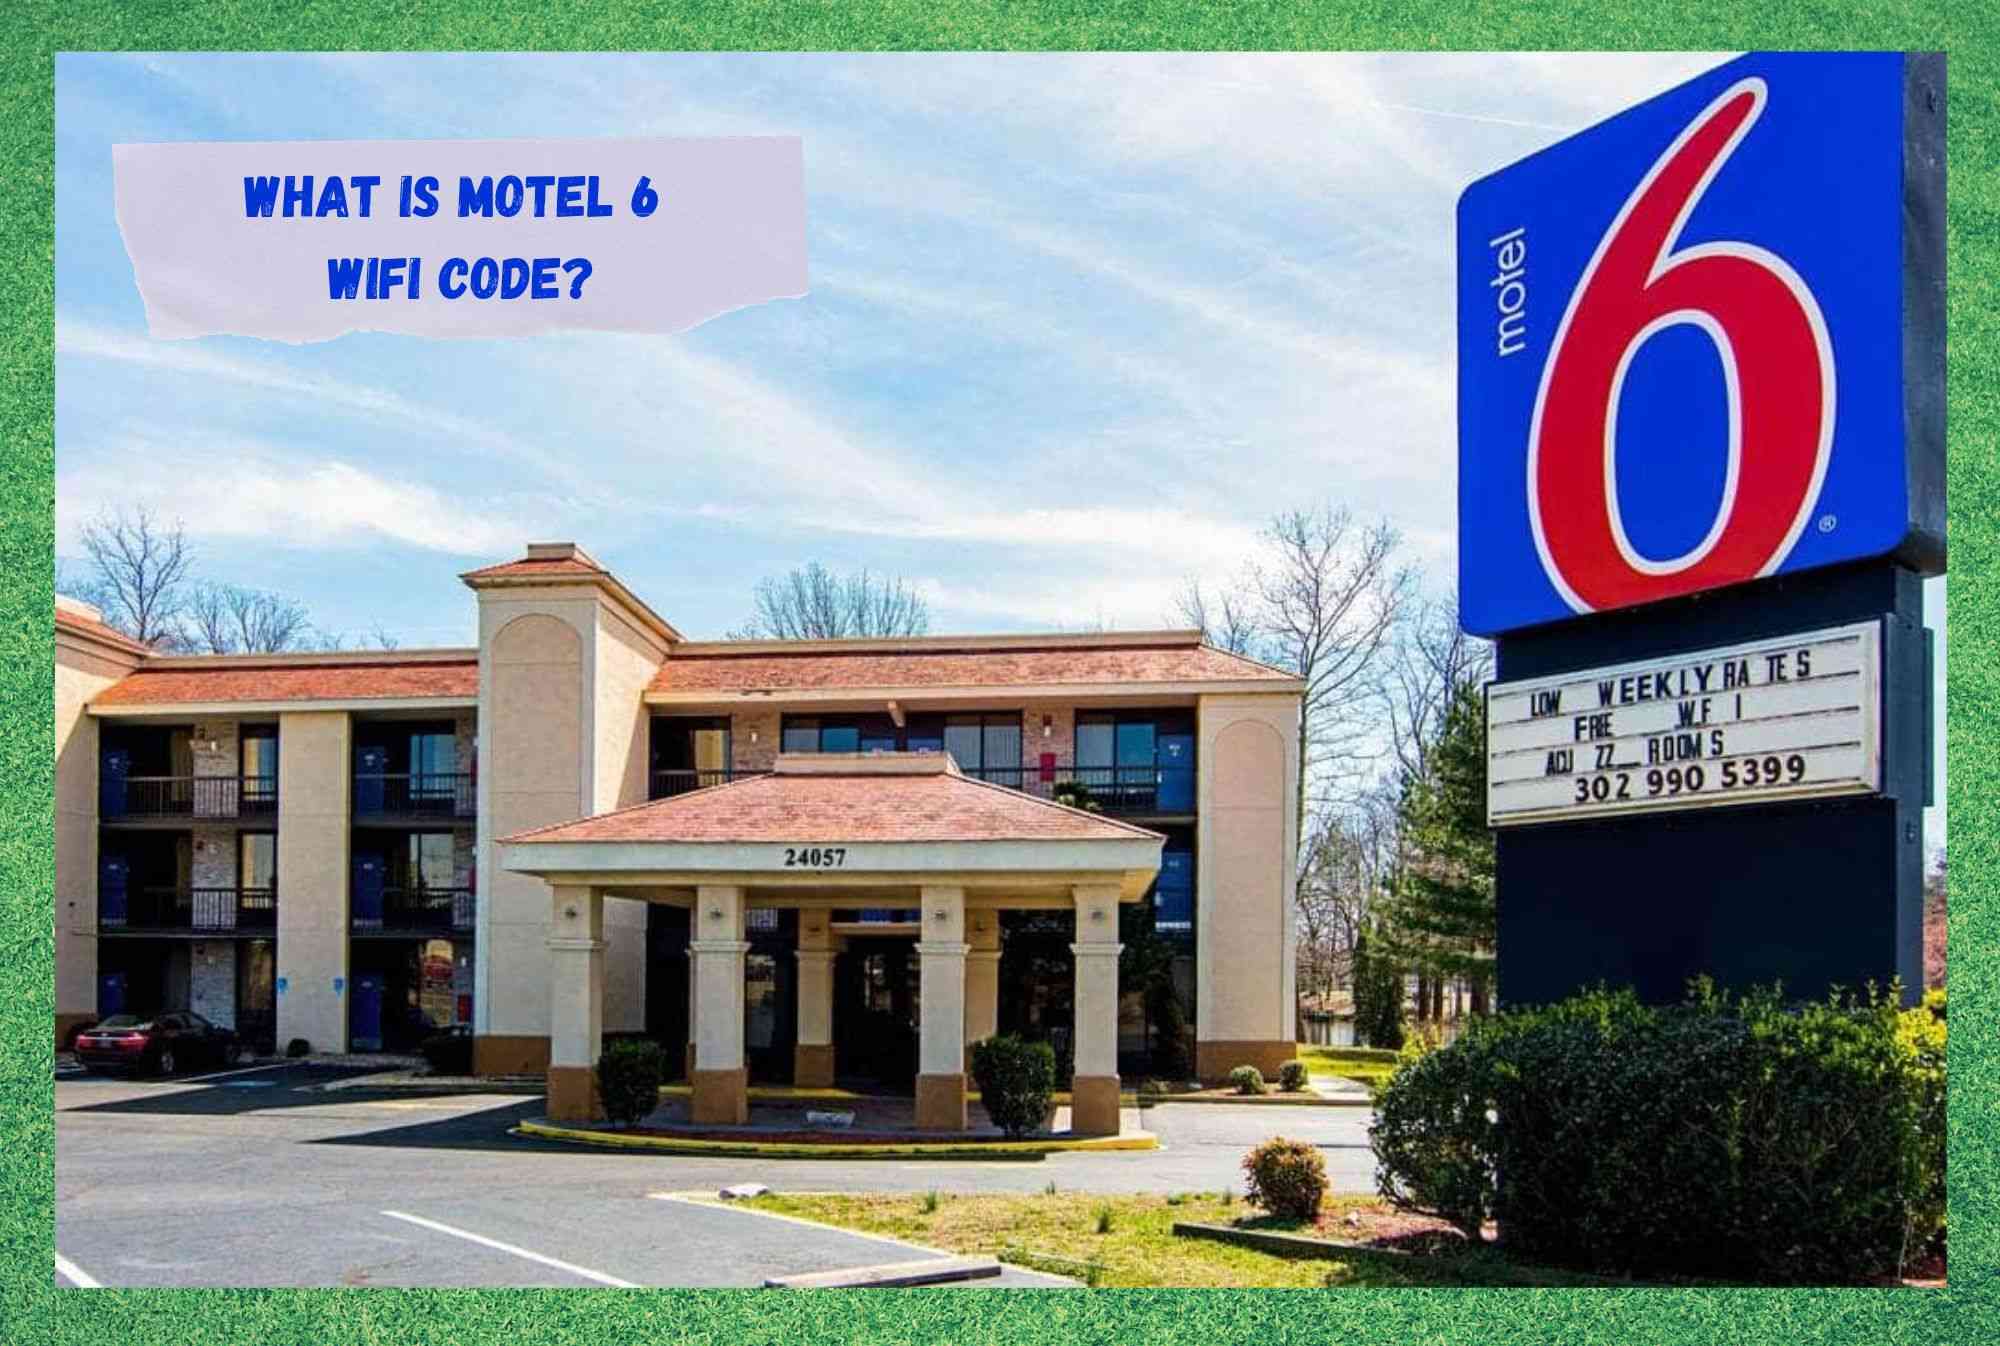 Co je kód Motel 6 WiFi?